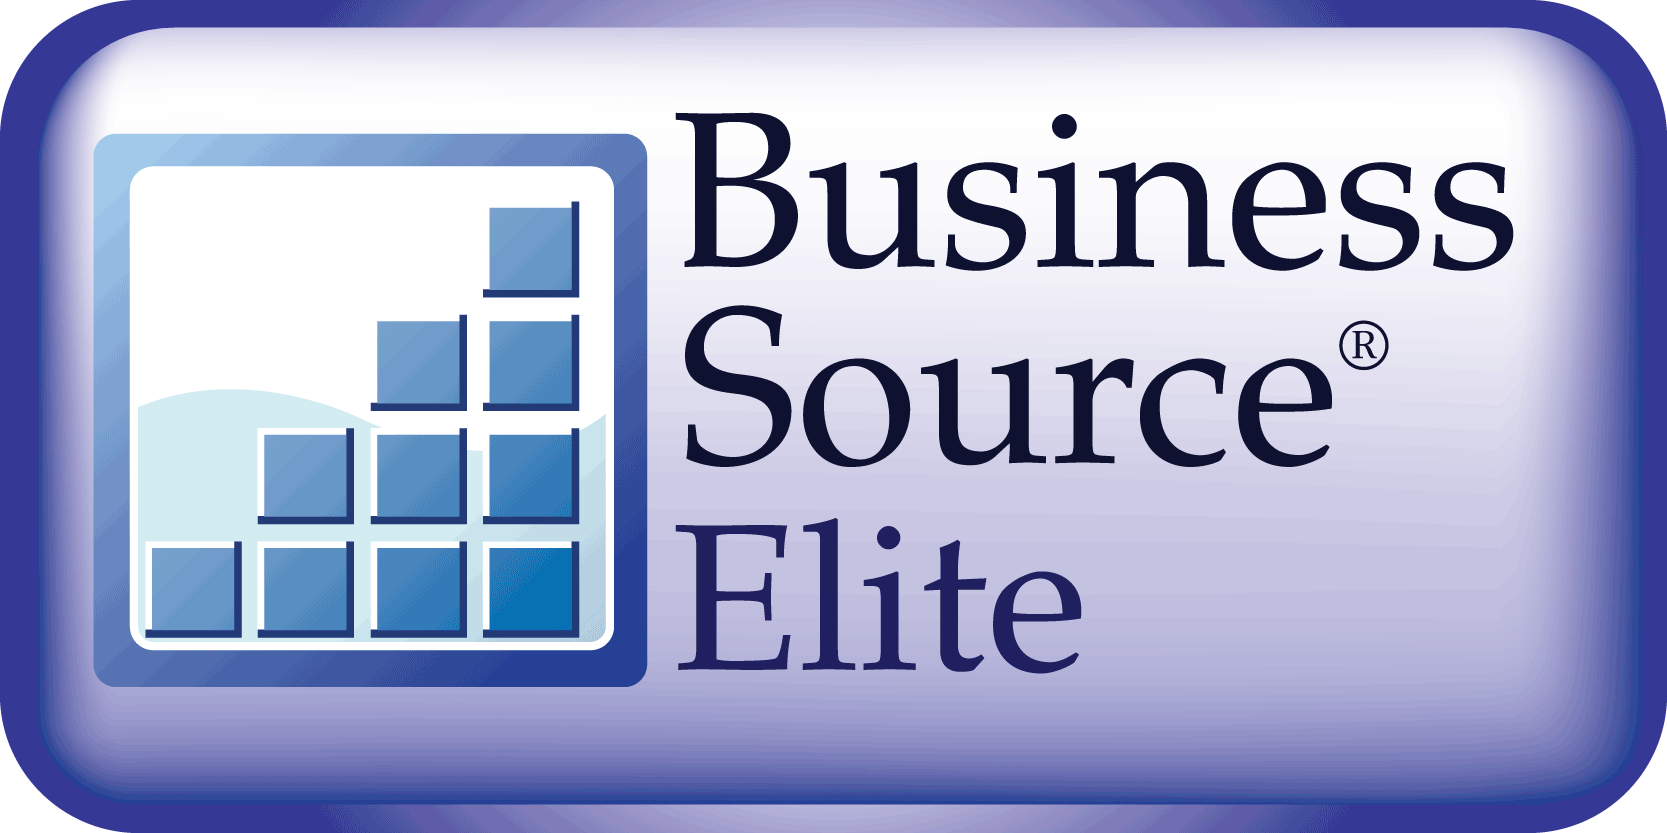 business source elite logo